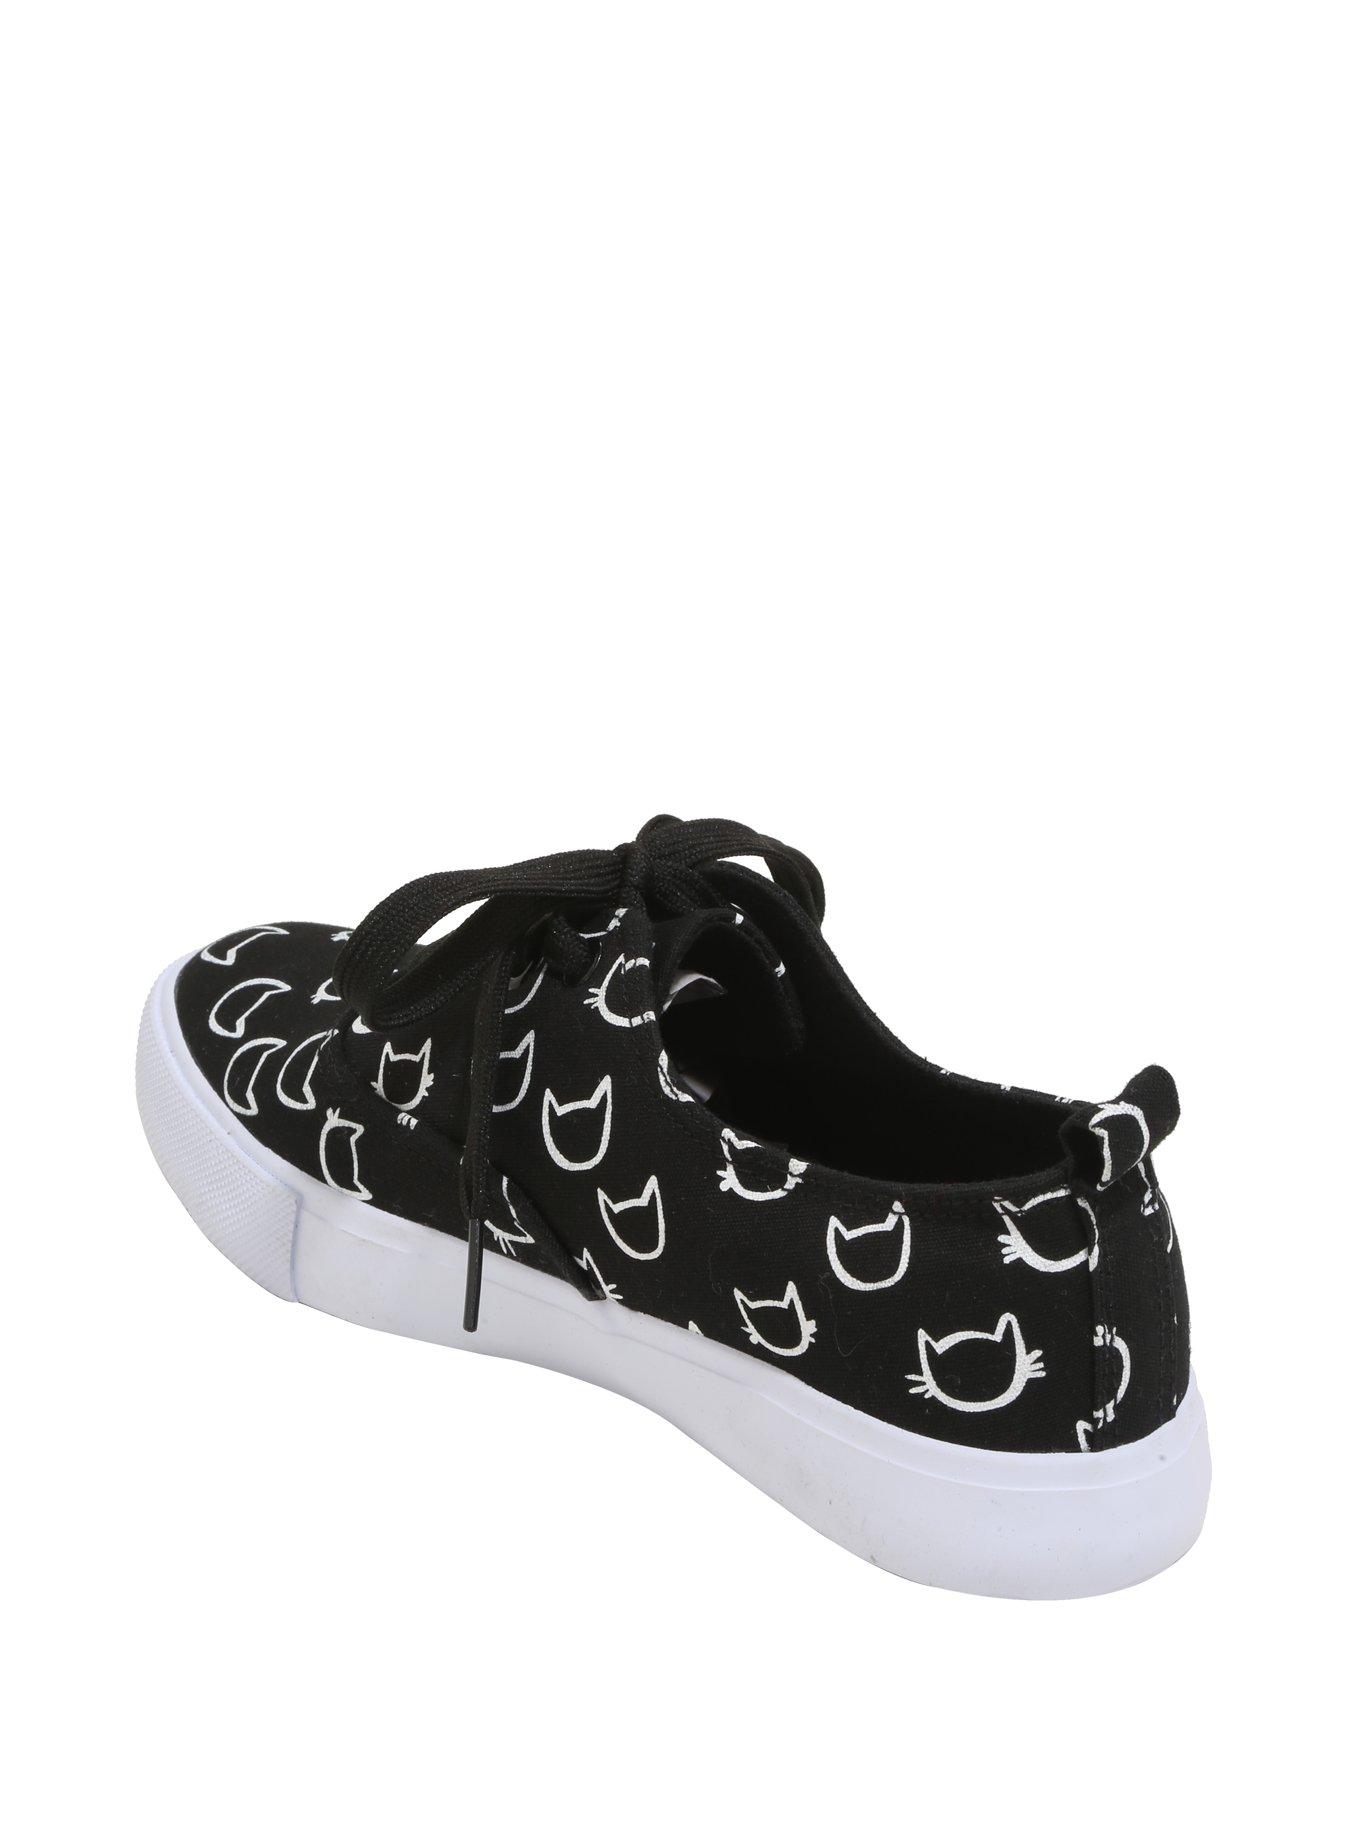 Cat Head Print Lace-Up Sneakers, BLACK, alternate